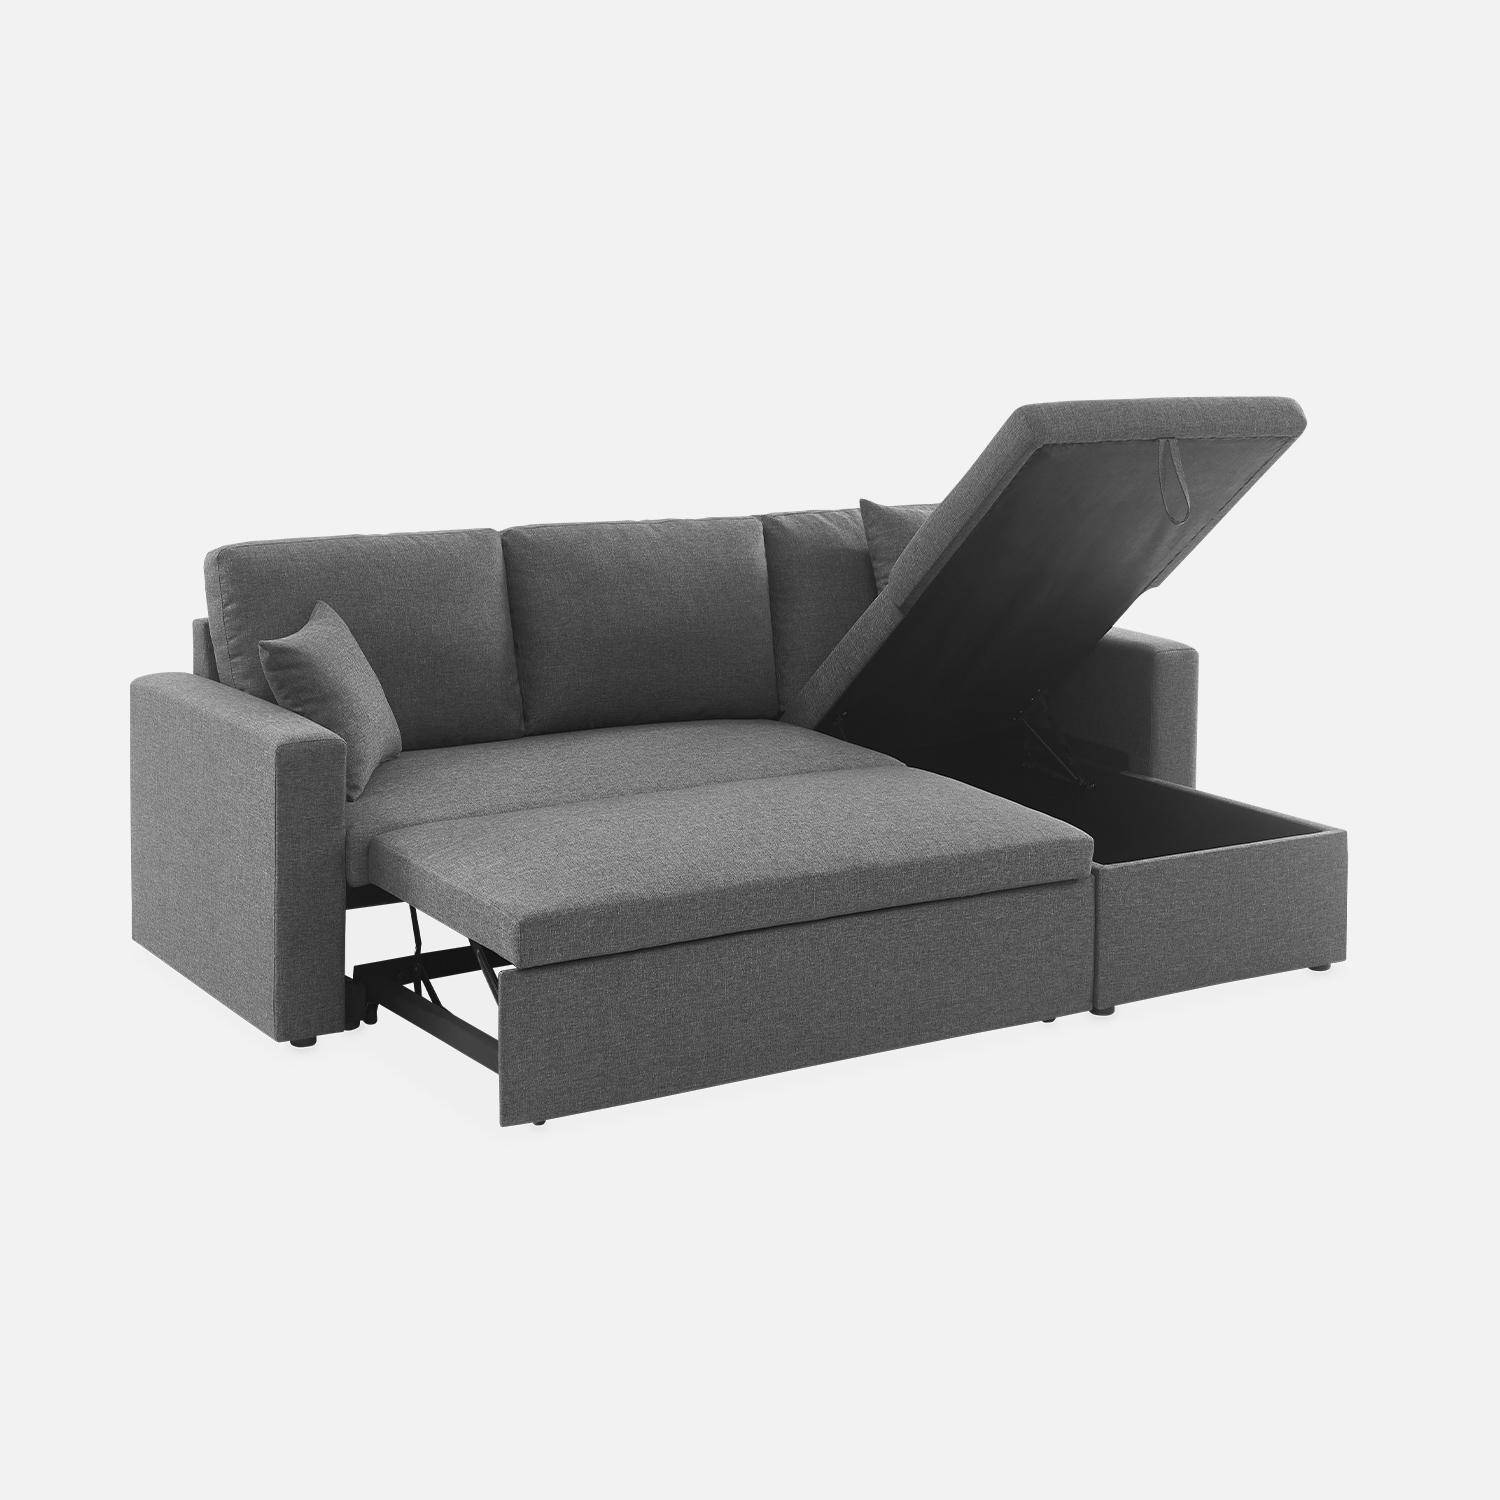 Stoffen donkergrijze bedbank met chaise longue en opbergruimte - IDA - 3-zits, omkeerbare hoeksalon, opbergruimte, zetelbed Photo8